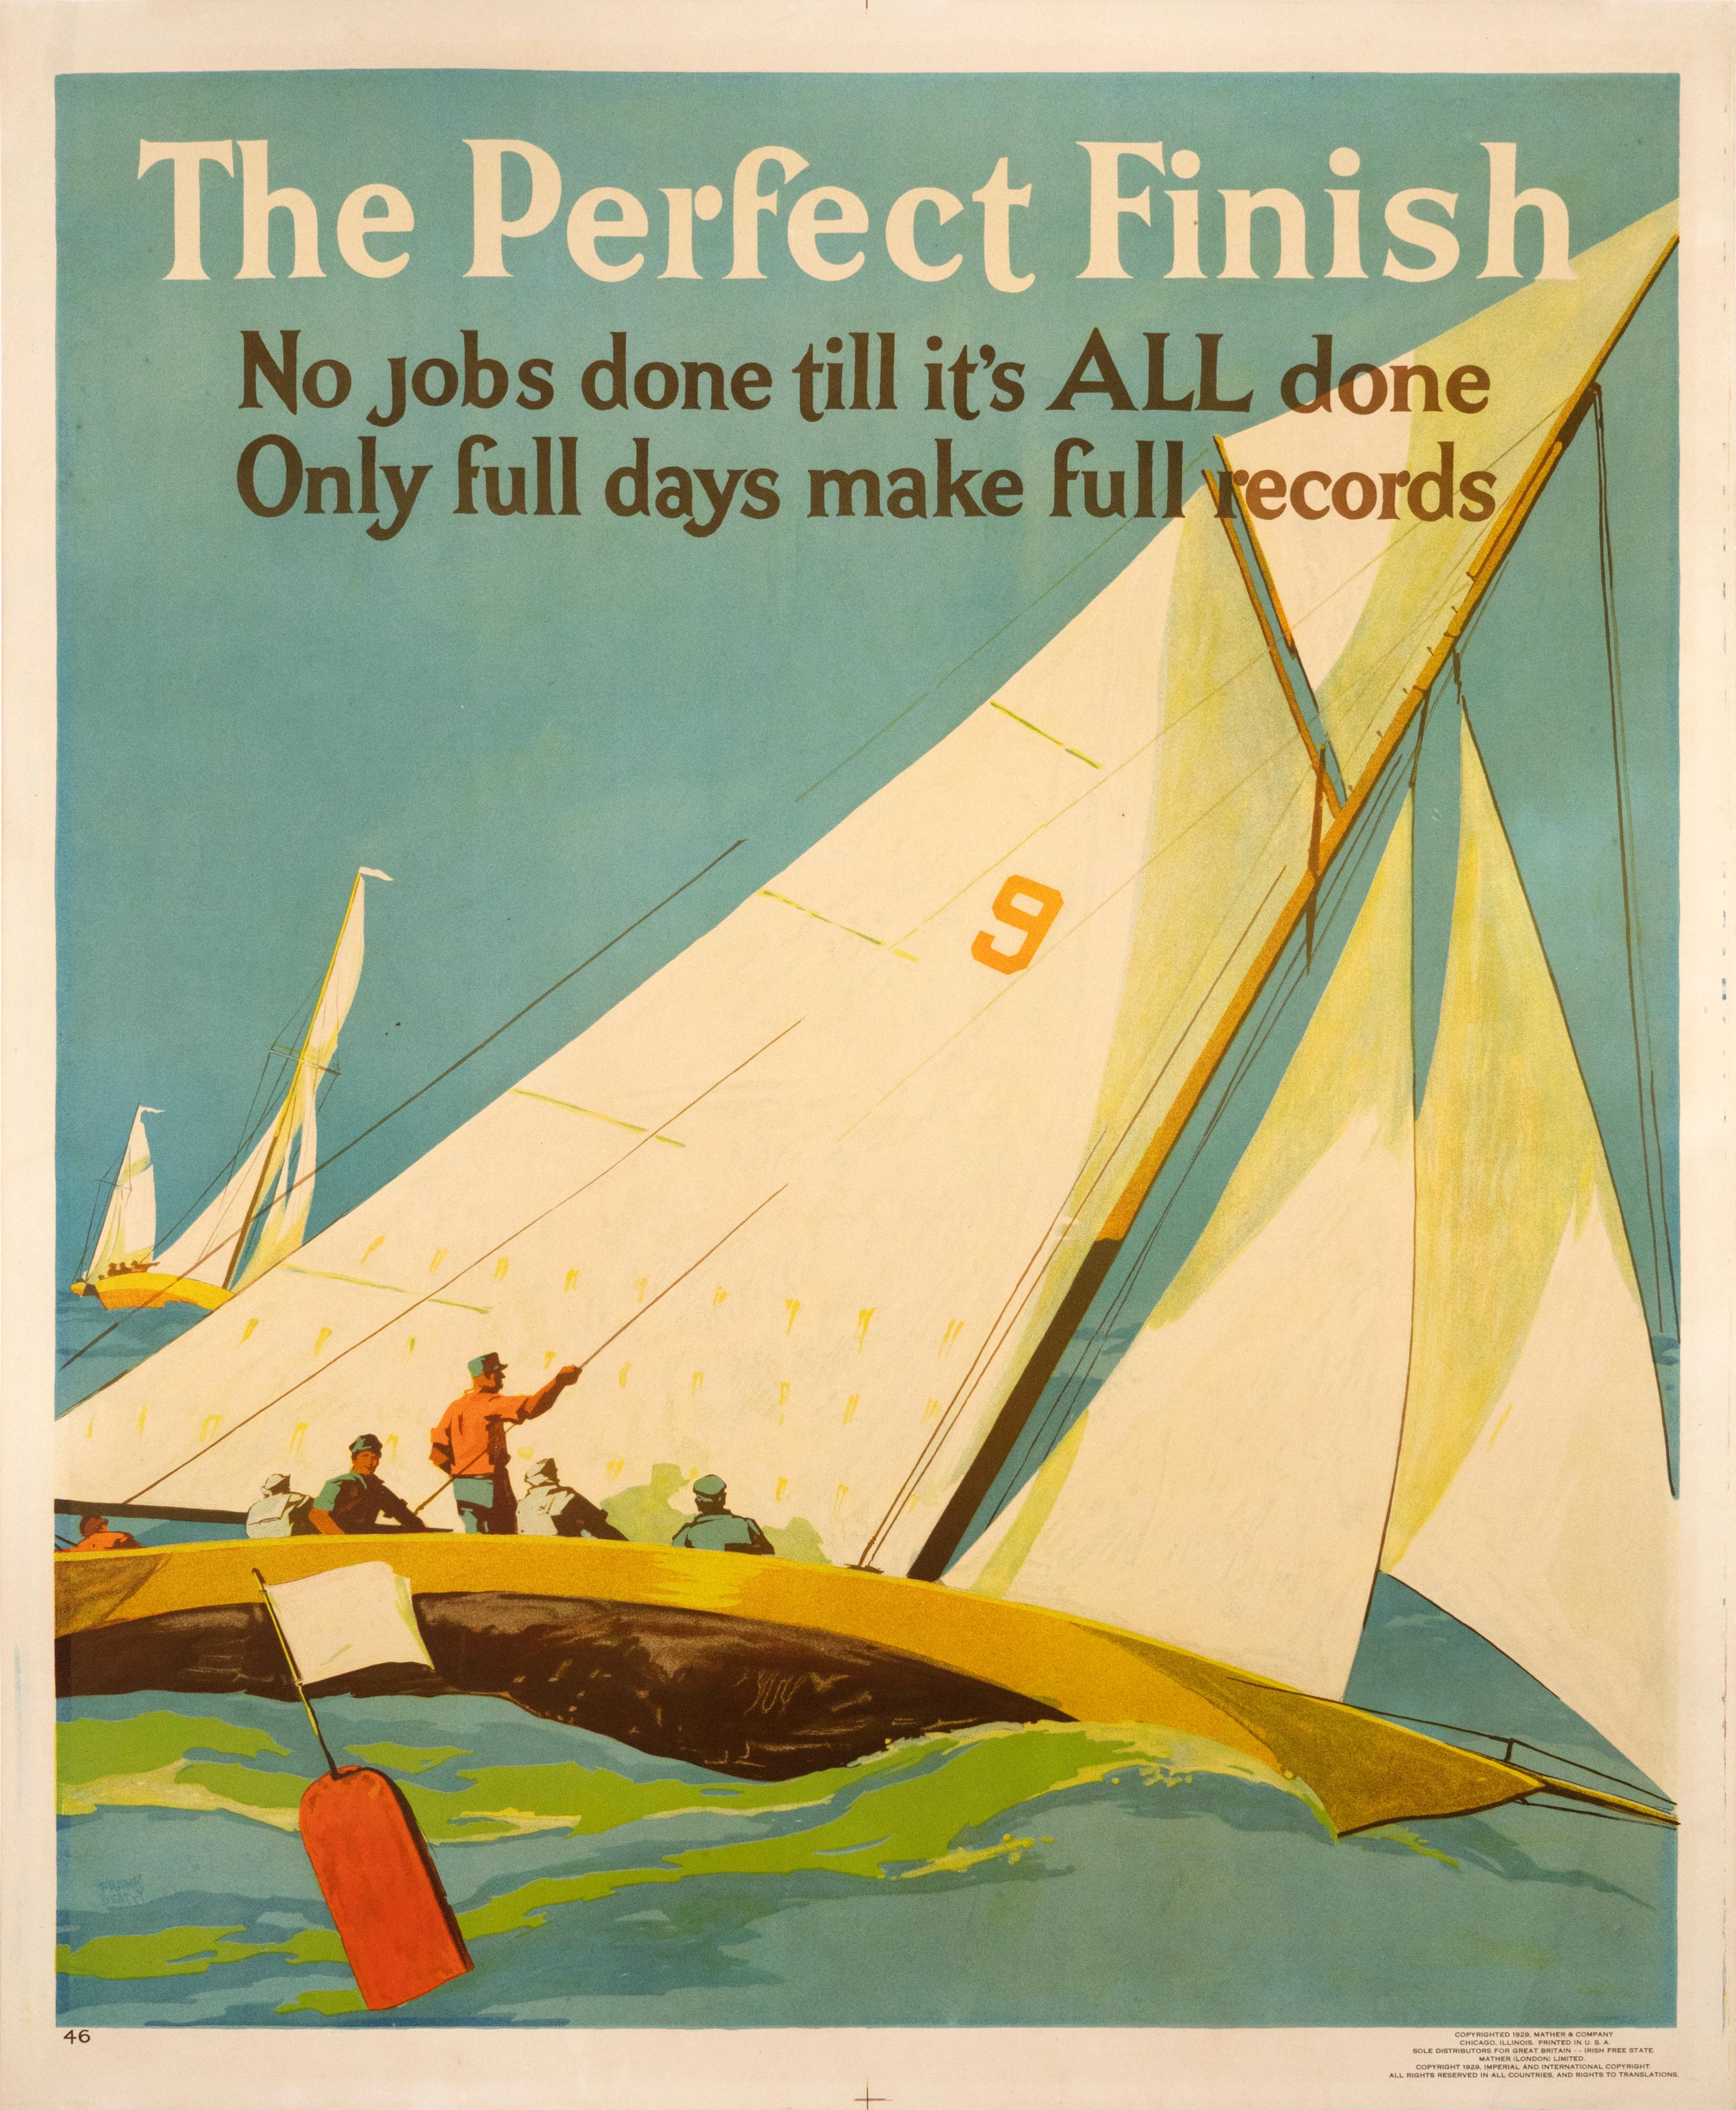 Frank Beatty Figurative Print - "The Perfect Finish (Mather Work Incentive)" Sailing Original Vintage Poster